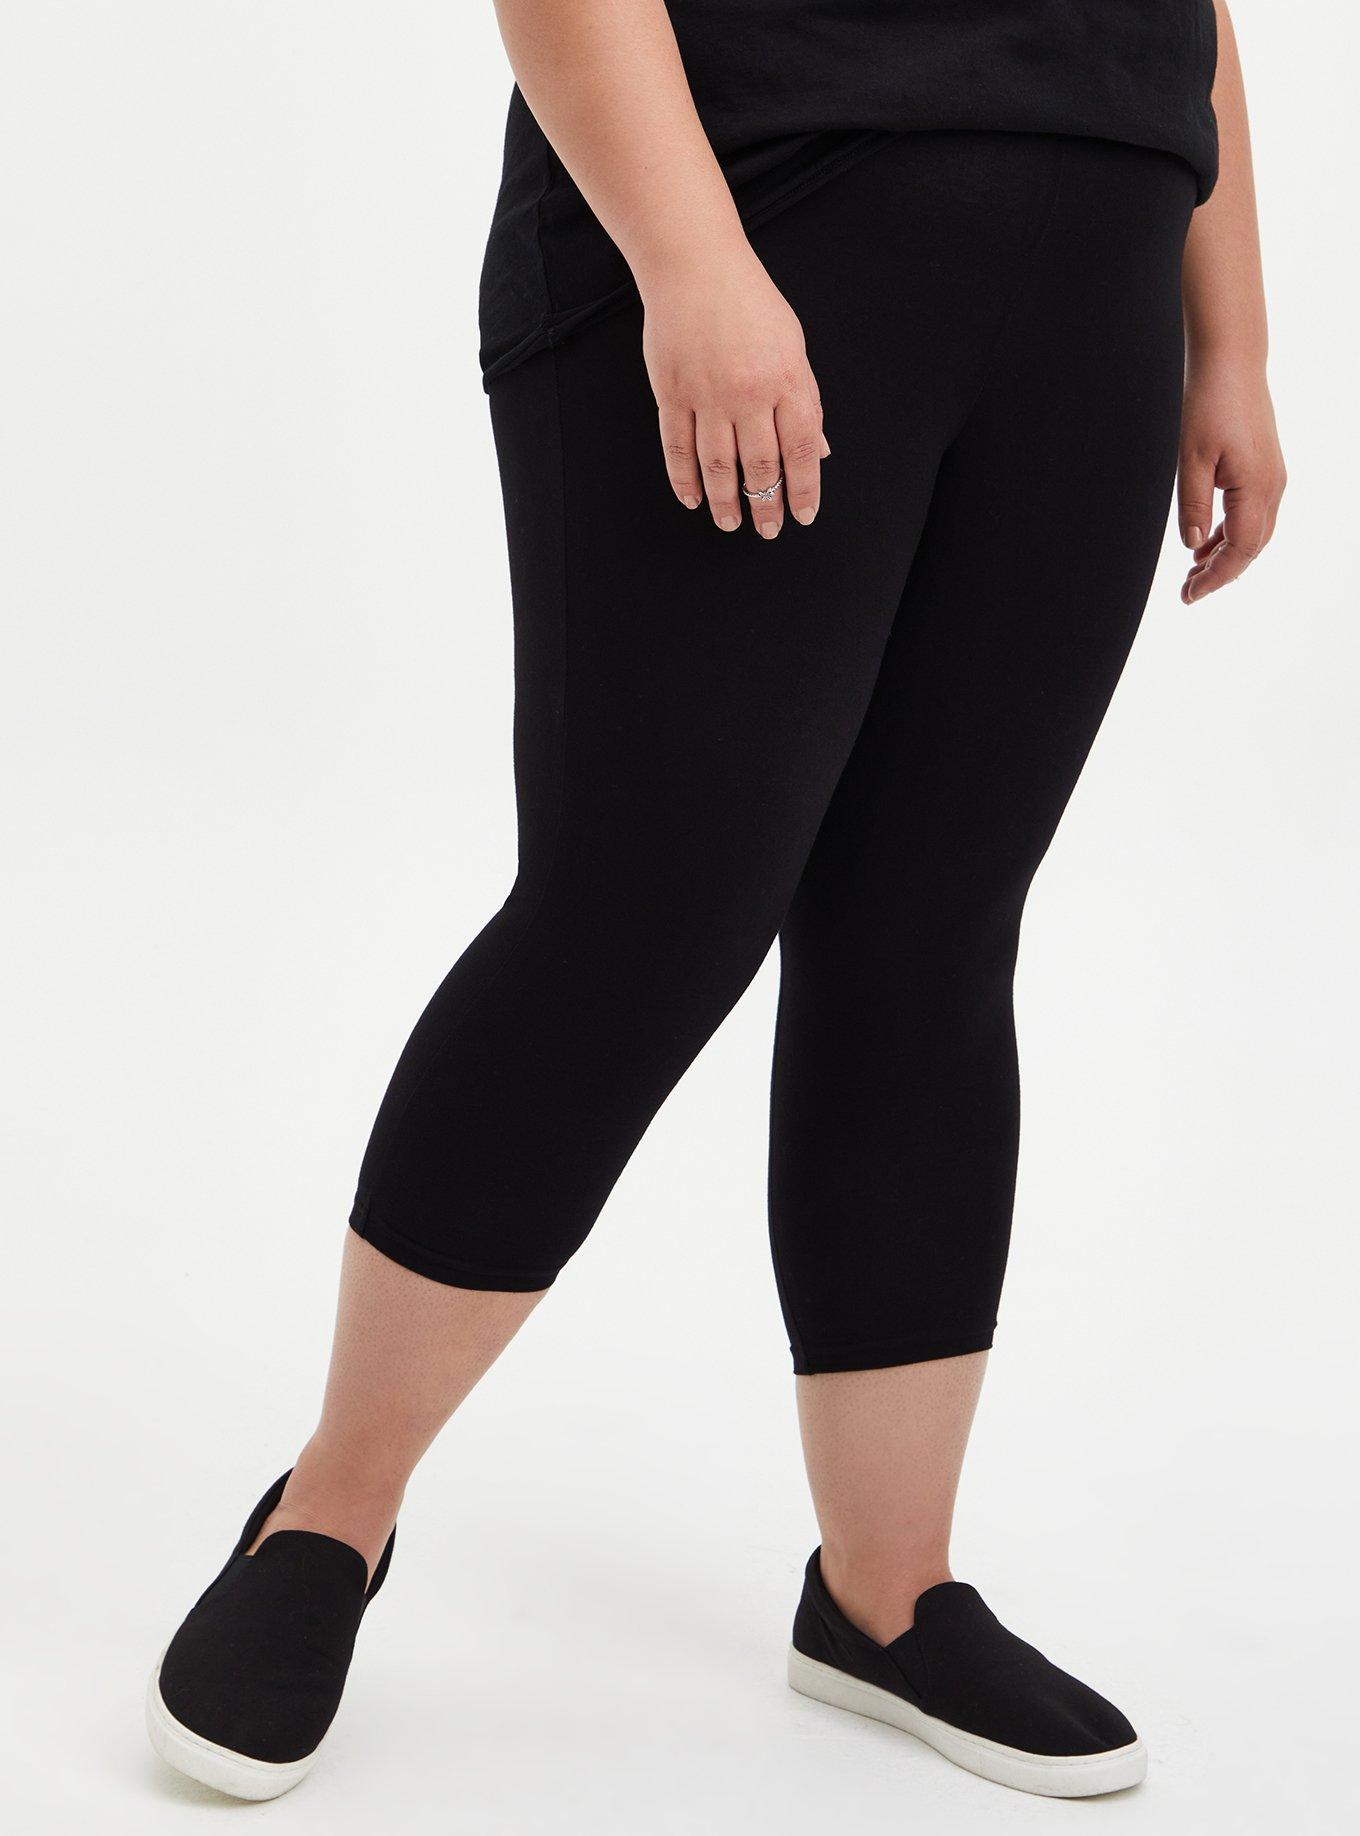 Buy online Plus Size Black Solid Capri Legging from Capris